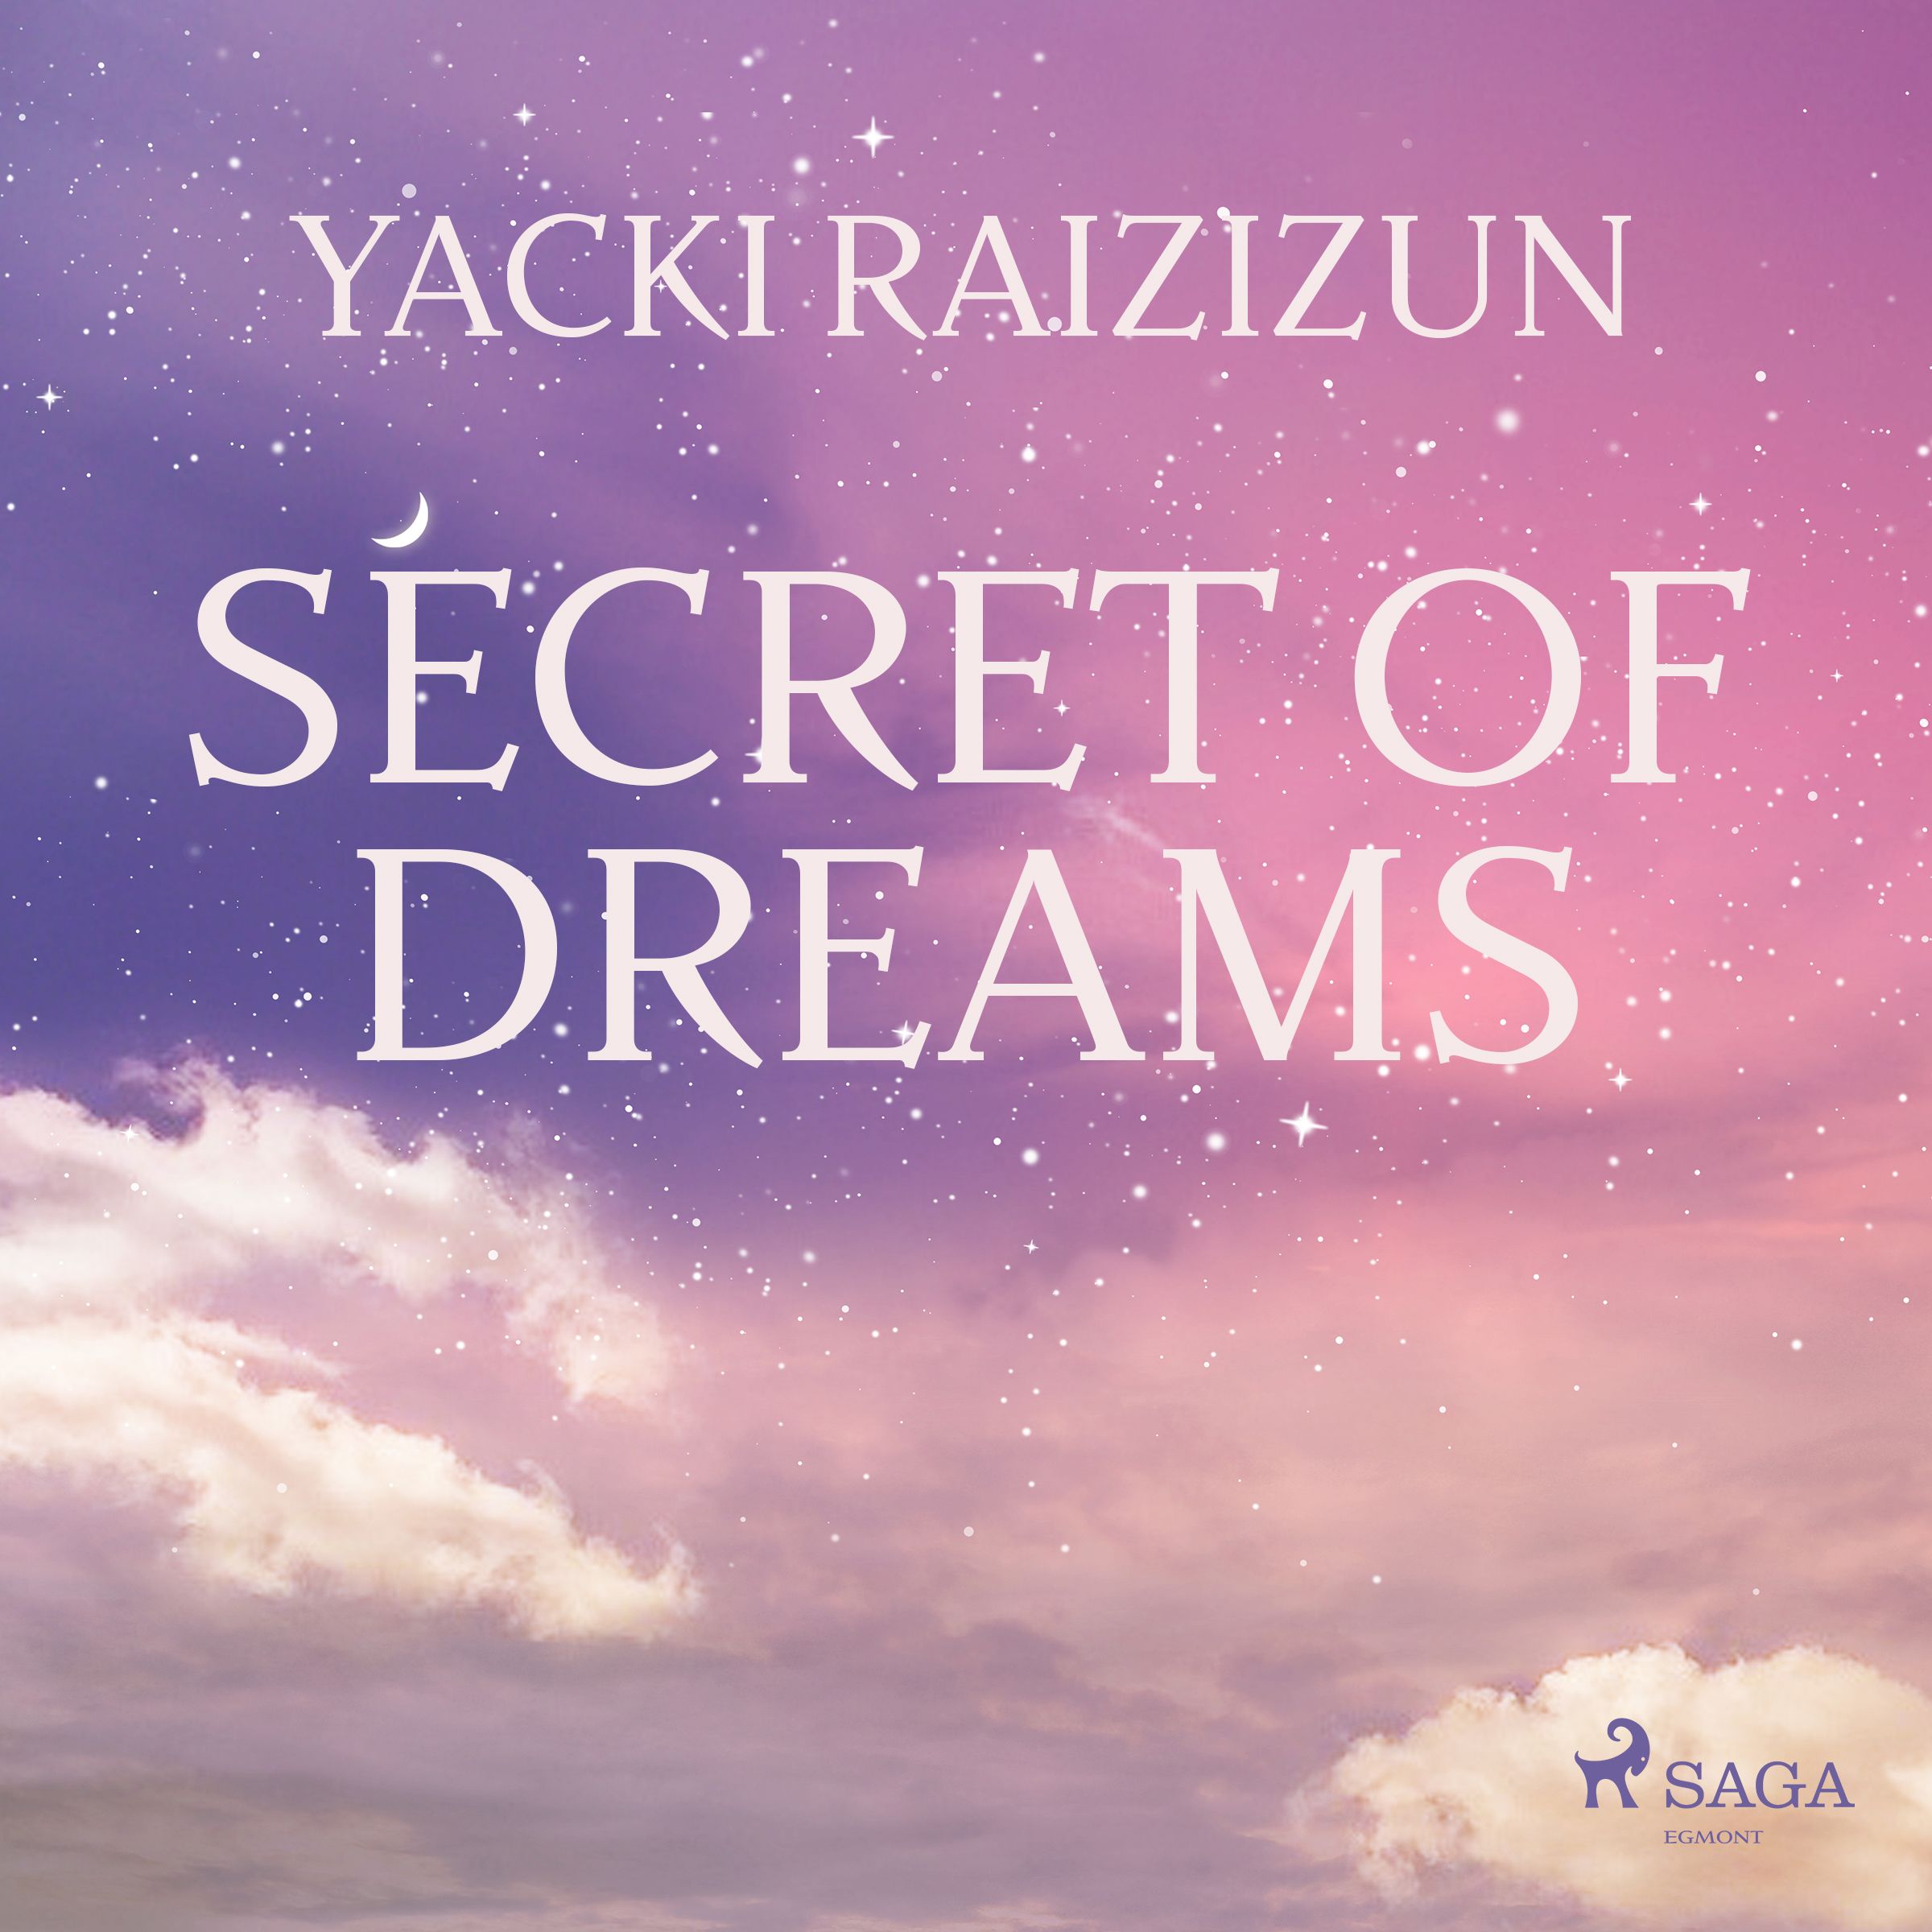 Secret of Dreams, audiobook by Theron Q. Dumont